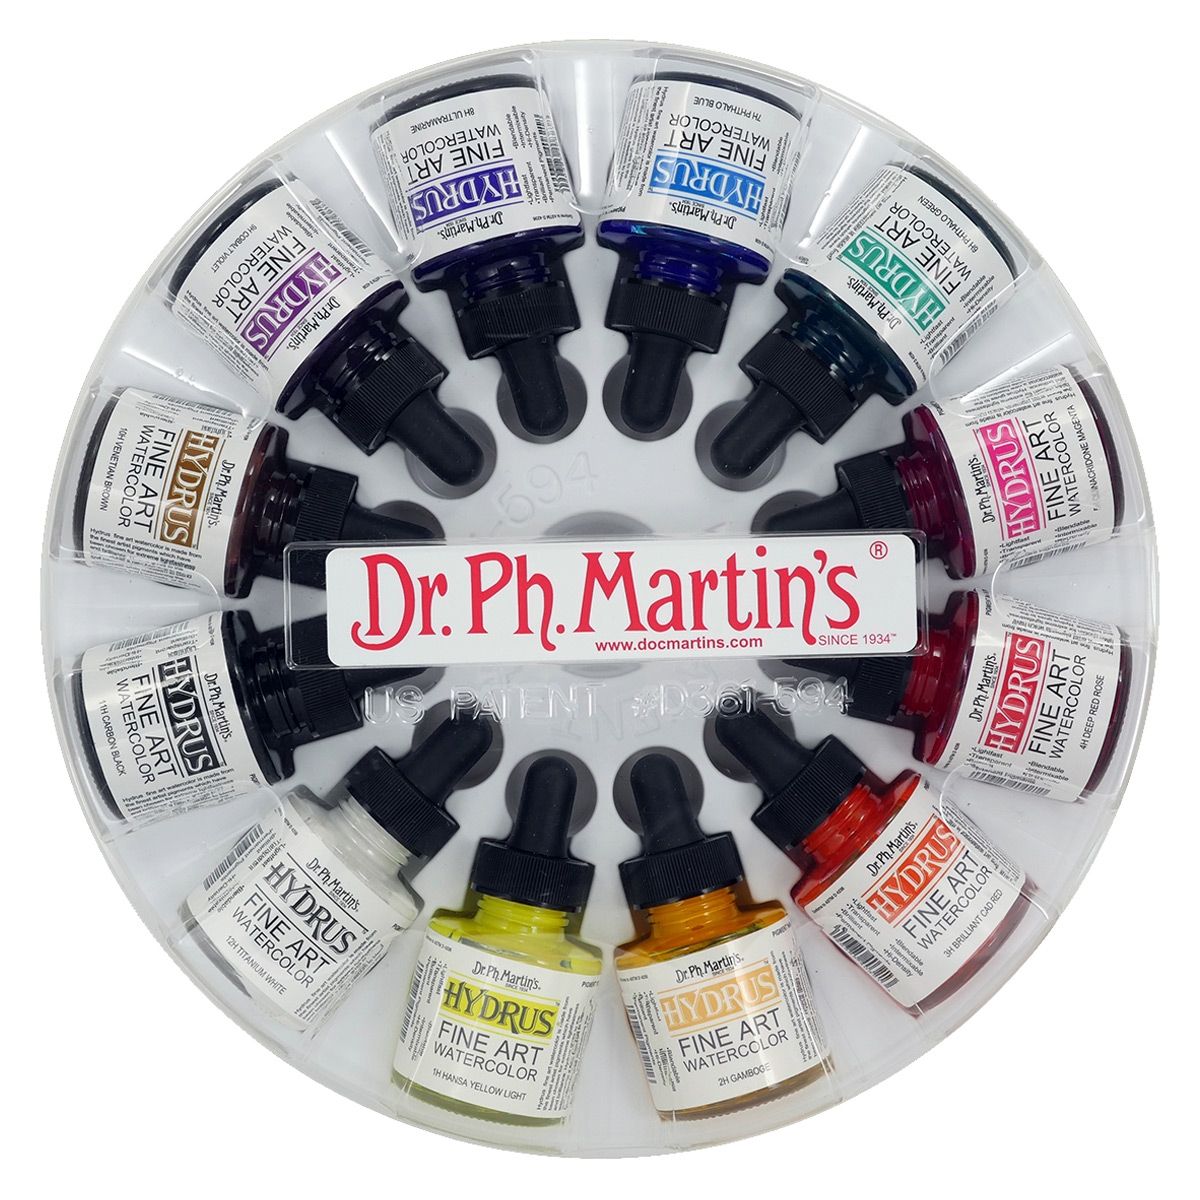 Dr. Ph. Martin's Hydrus Watercolor Set No. 1, 1 oz. Bottles